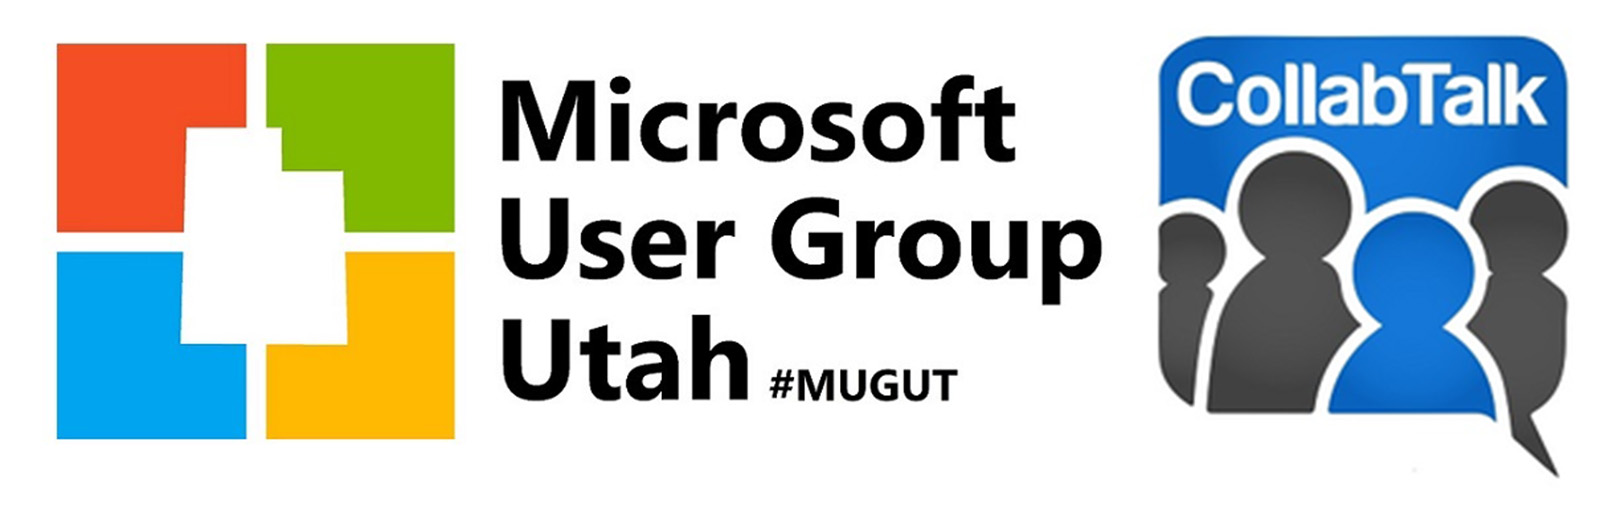 Microsoft User Group Utah with CollabTalk banner